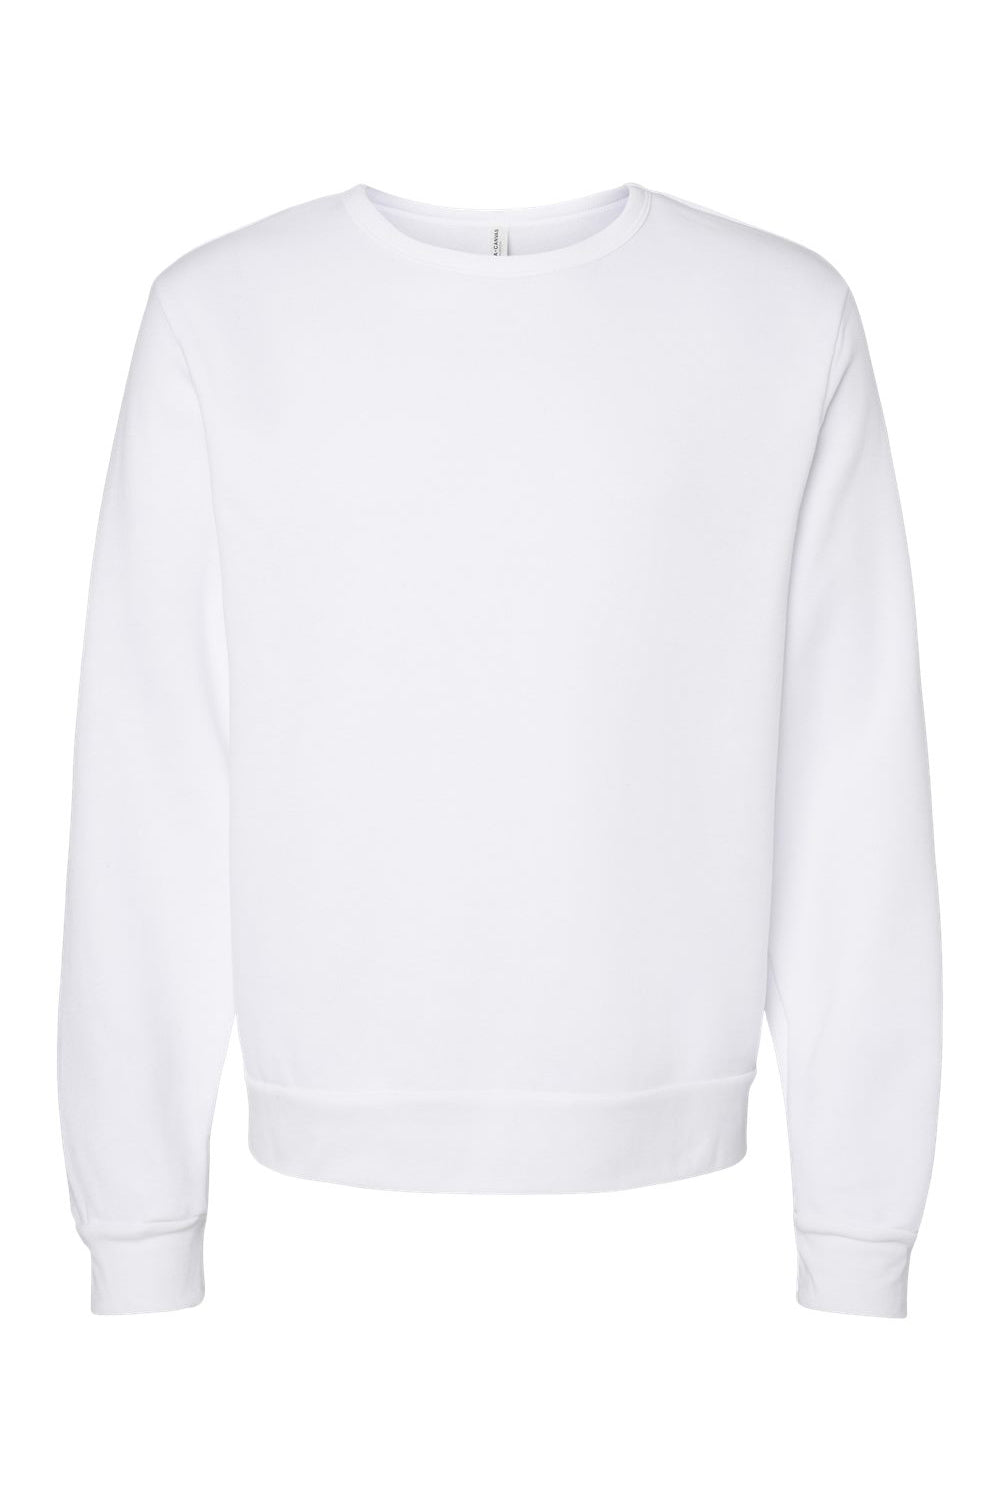 Bella + Canvas 3911 Mens Classic Crewneck Sweatshirt White Flat Front